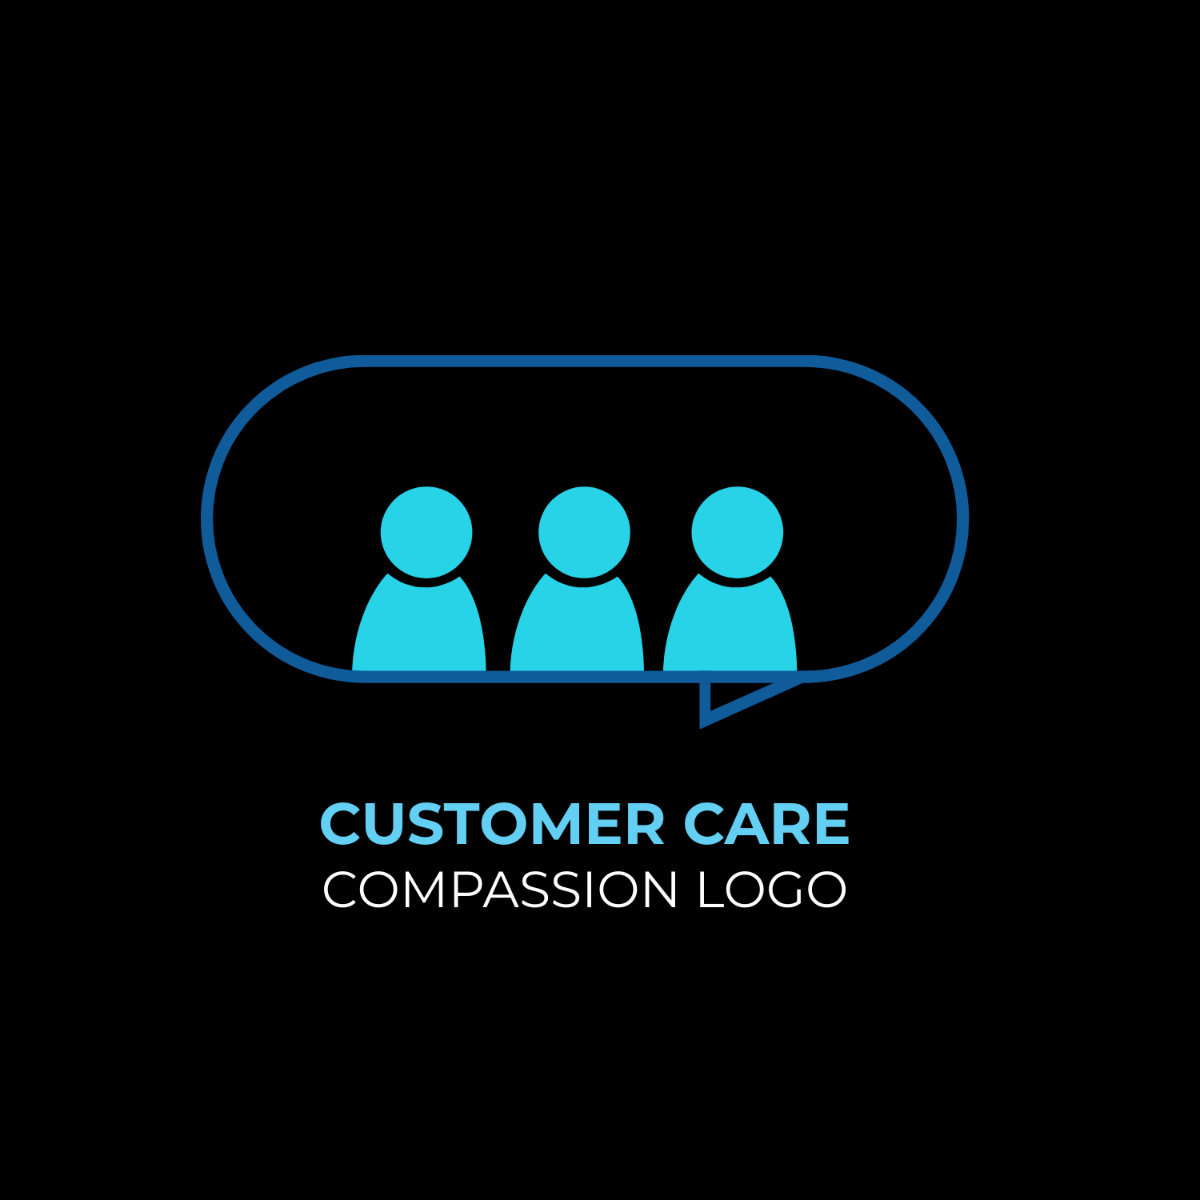 Free Customer Care Compassion Logo Template